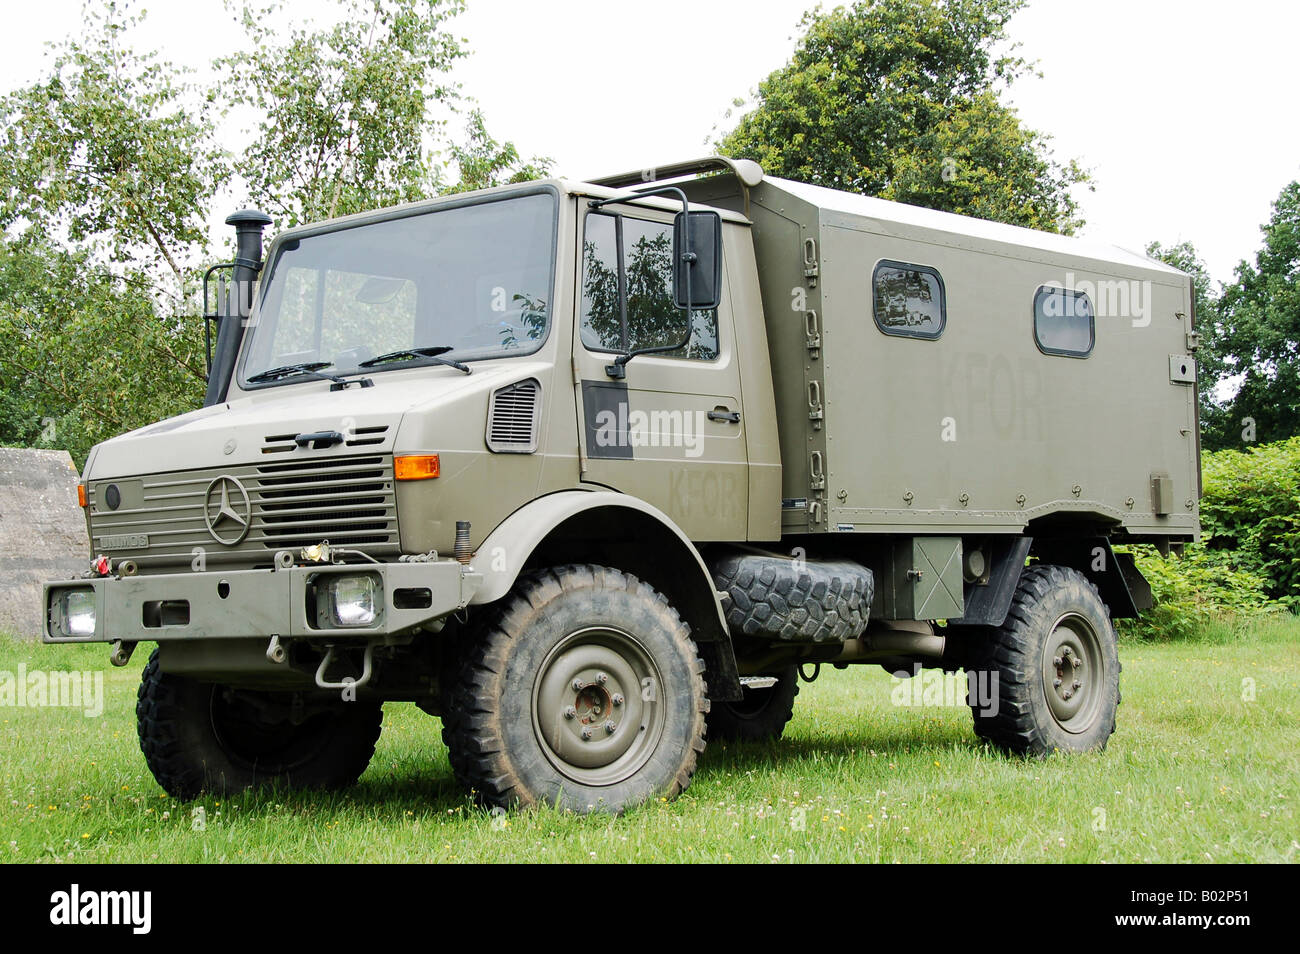 https://c8.alamy.com/comp/B02P51/unimog-truck-of-the-belgian-army-B02P51.jpg